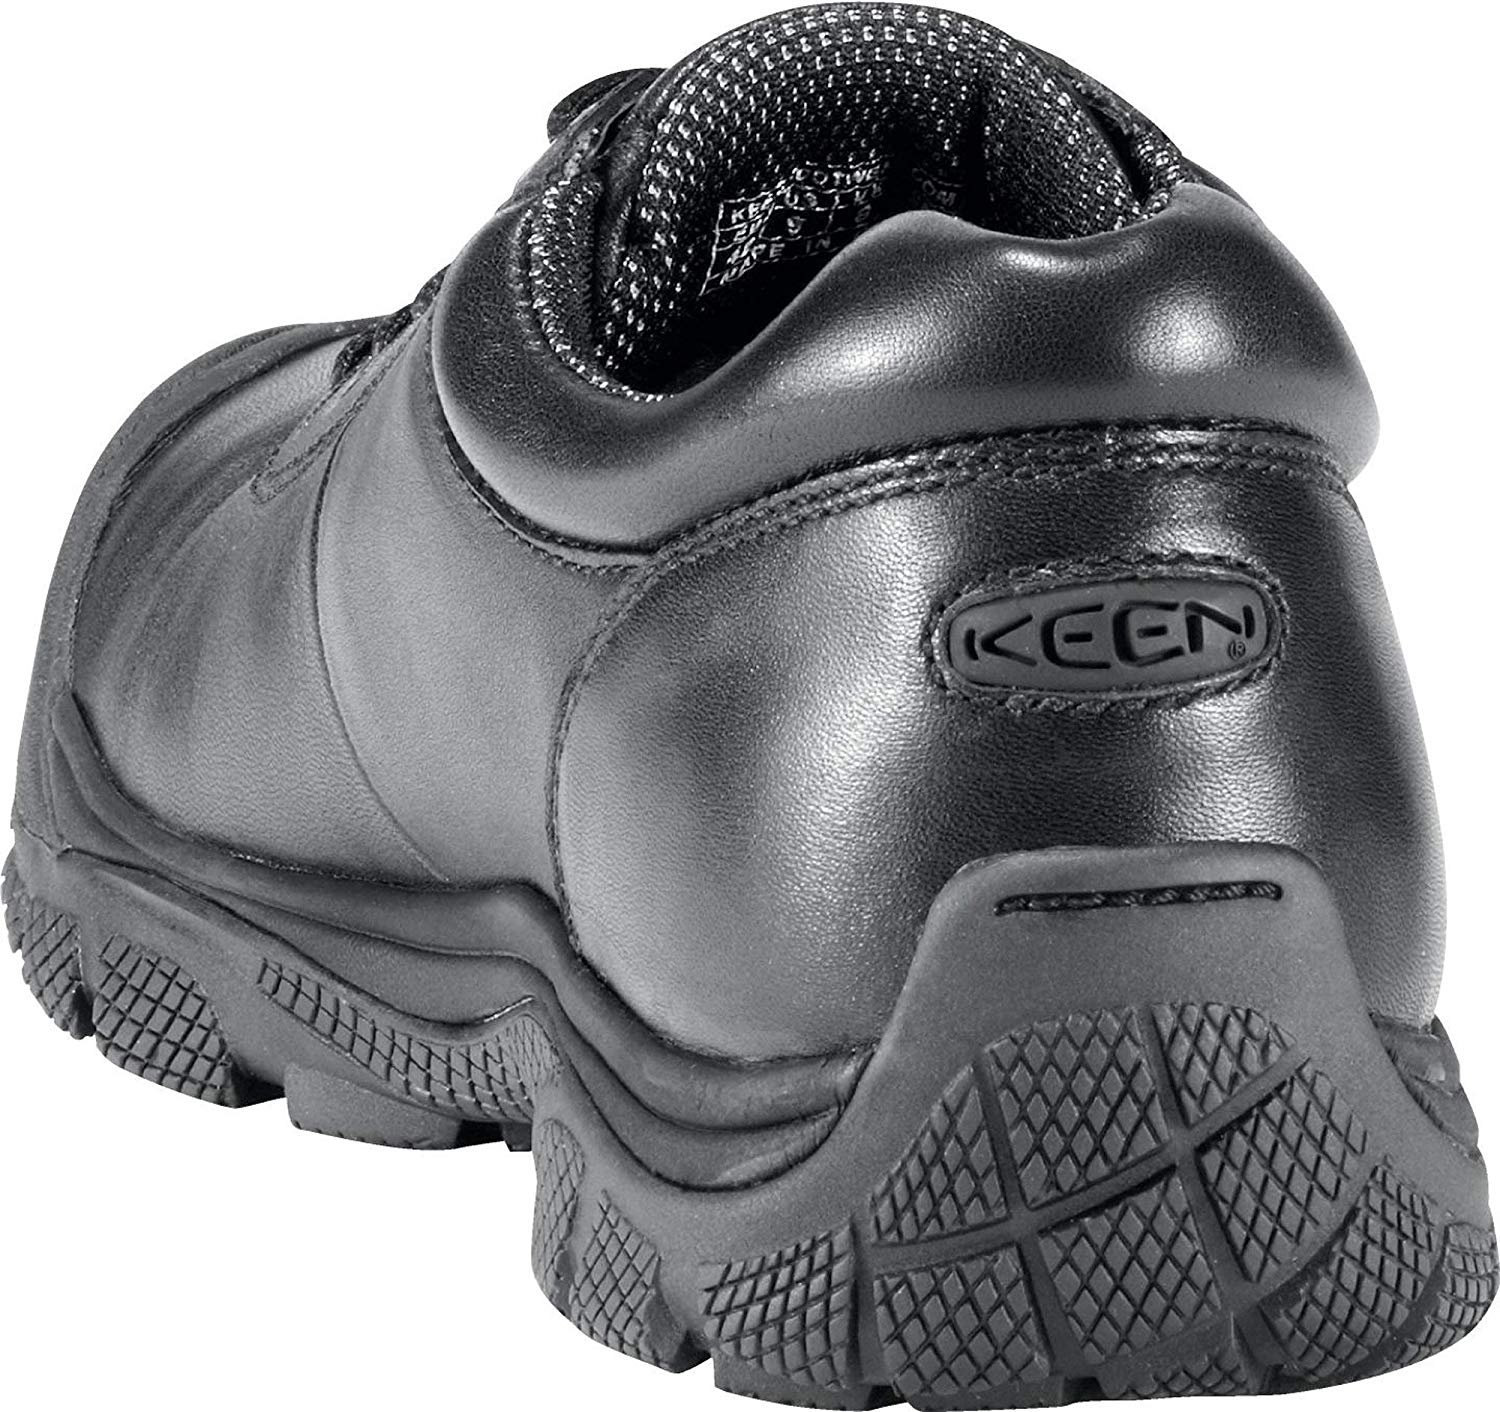 Keen Utility Men's PTC Dress Oxford-M Industrial Shoe, Black, Size 10.0 KxWo | eBay